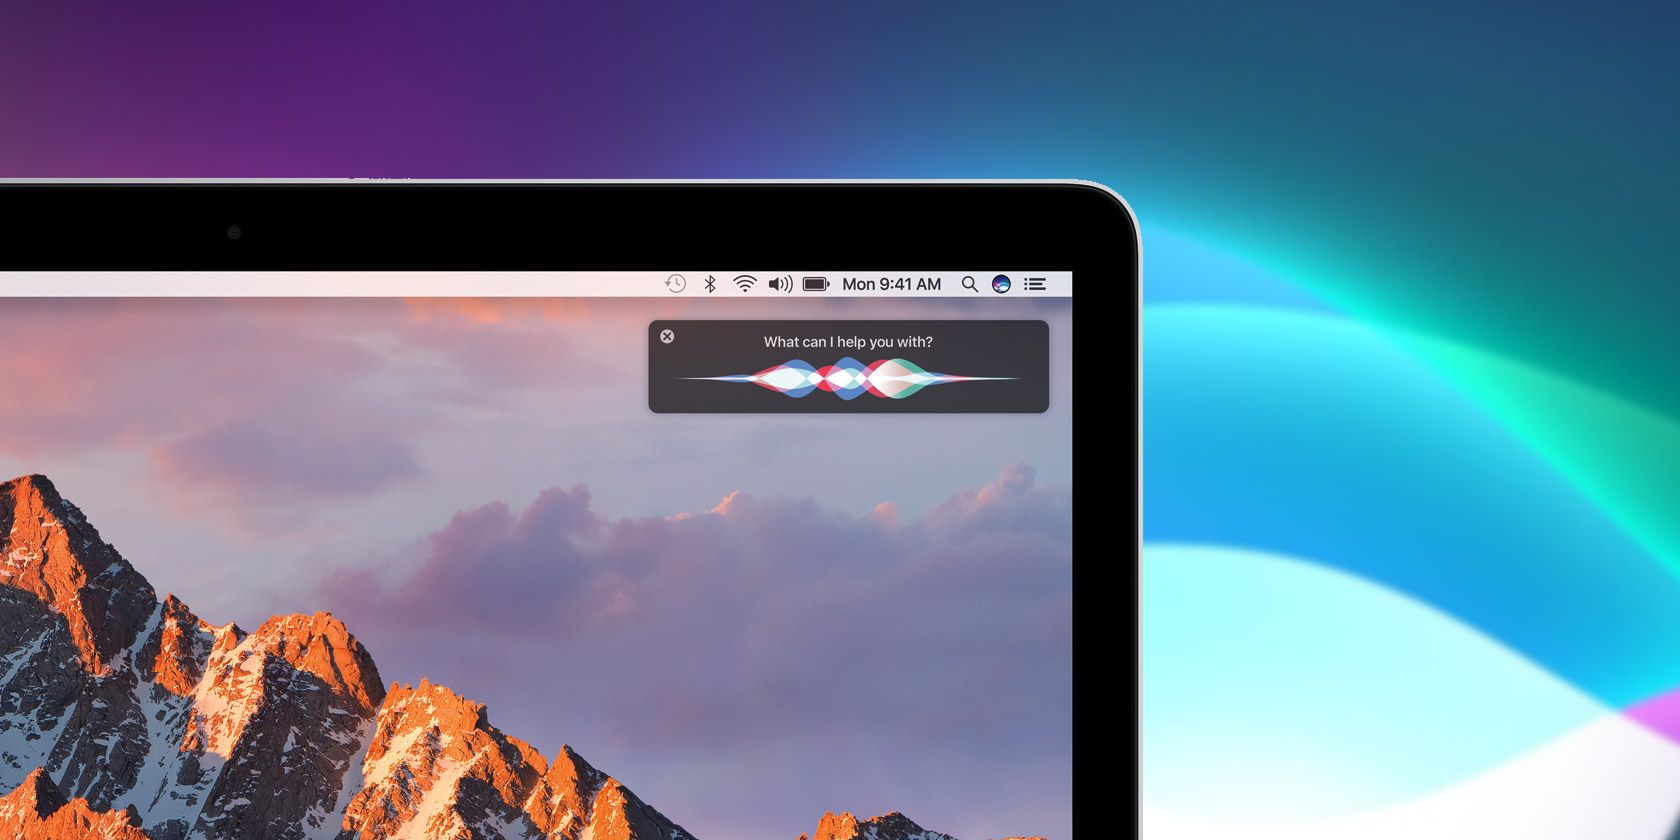 open windows applications on mac